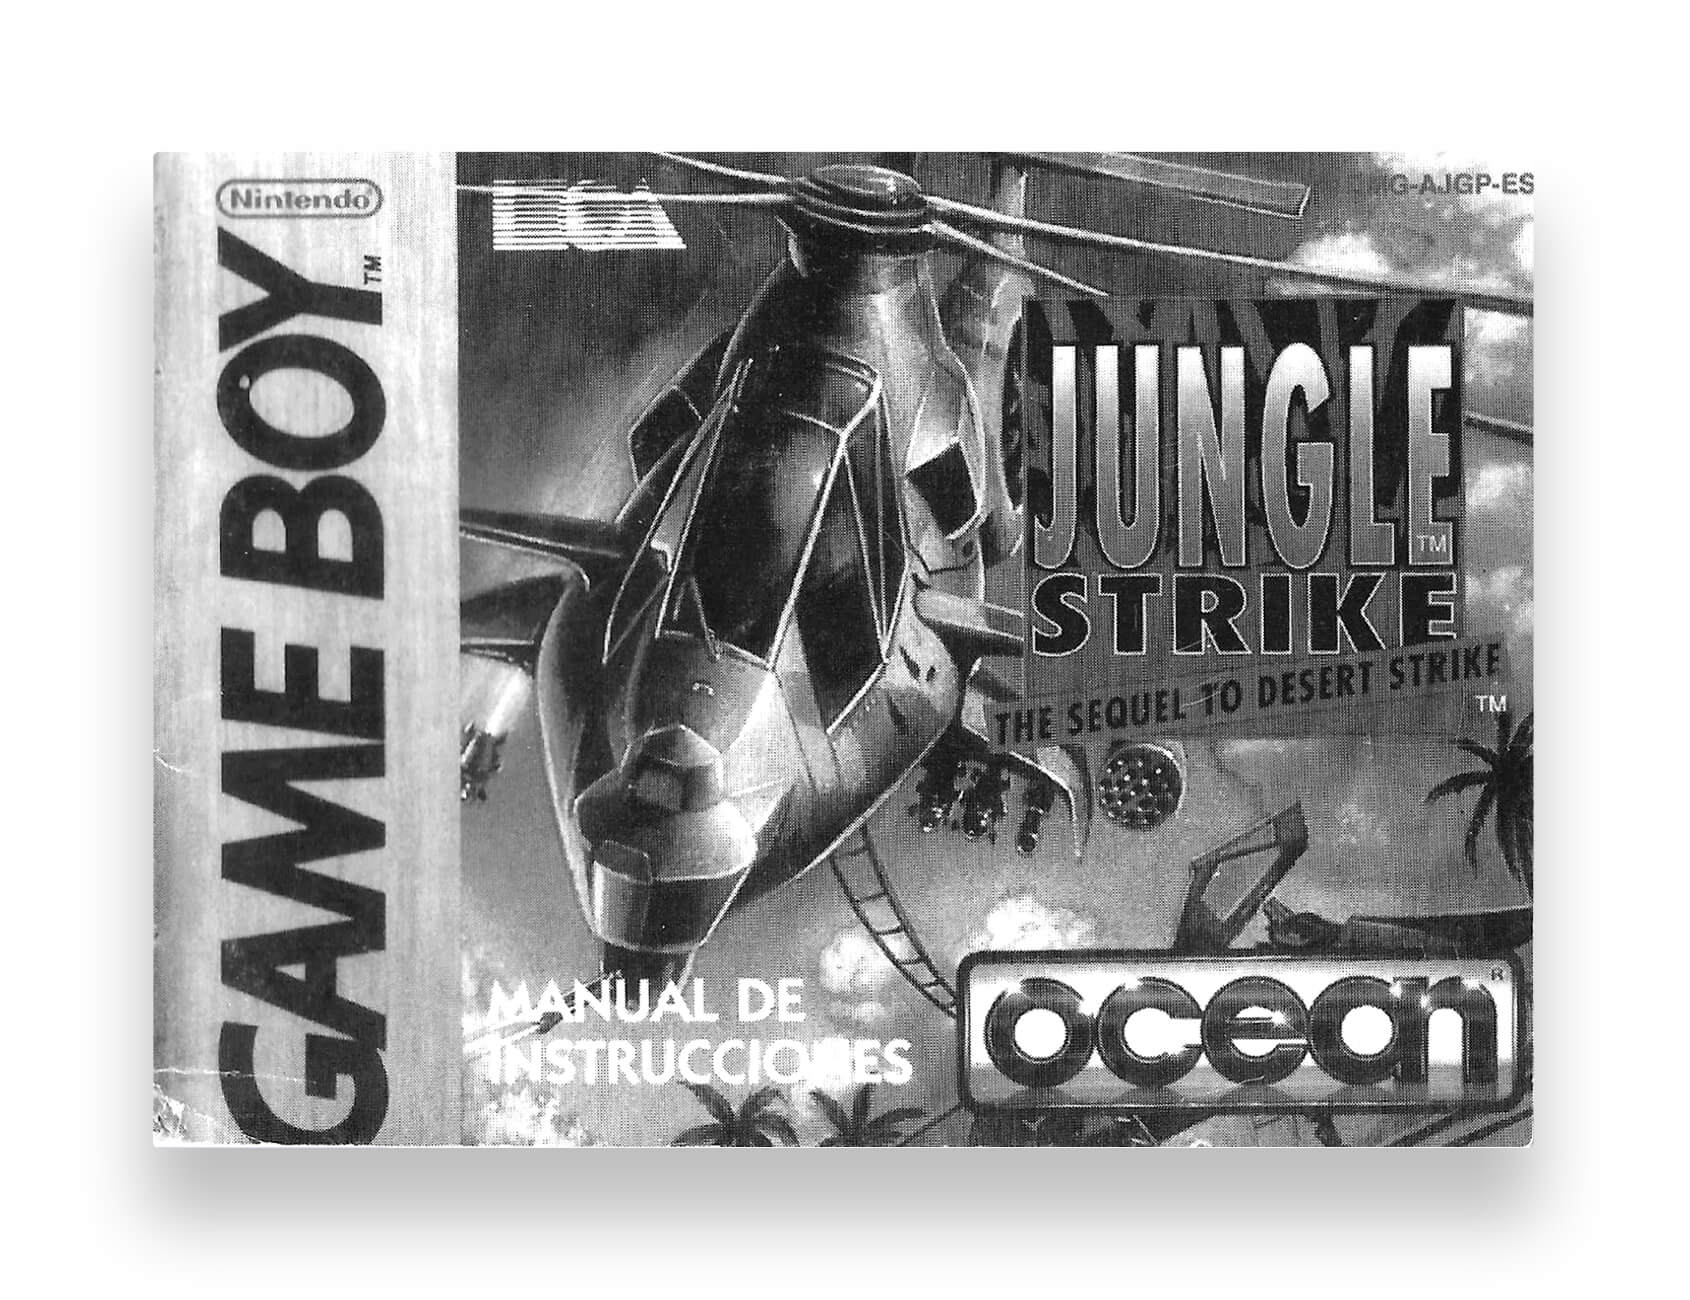 Jungle Strike: the Sequel to Desert Strike